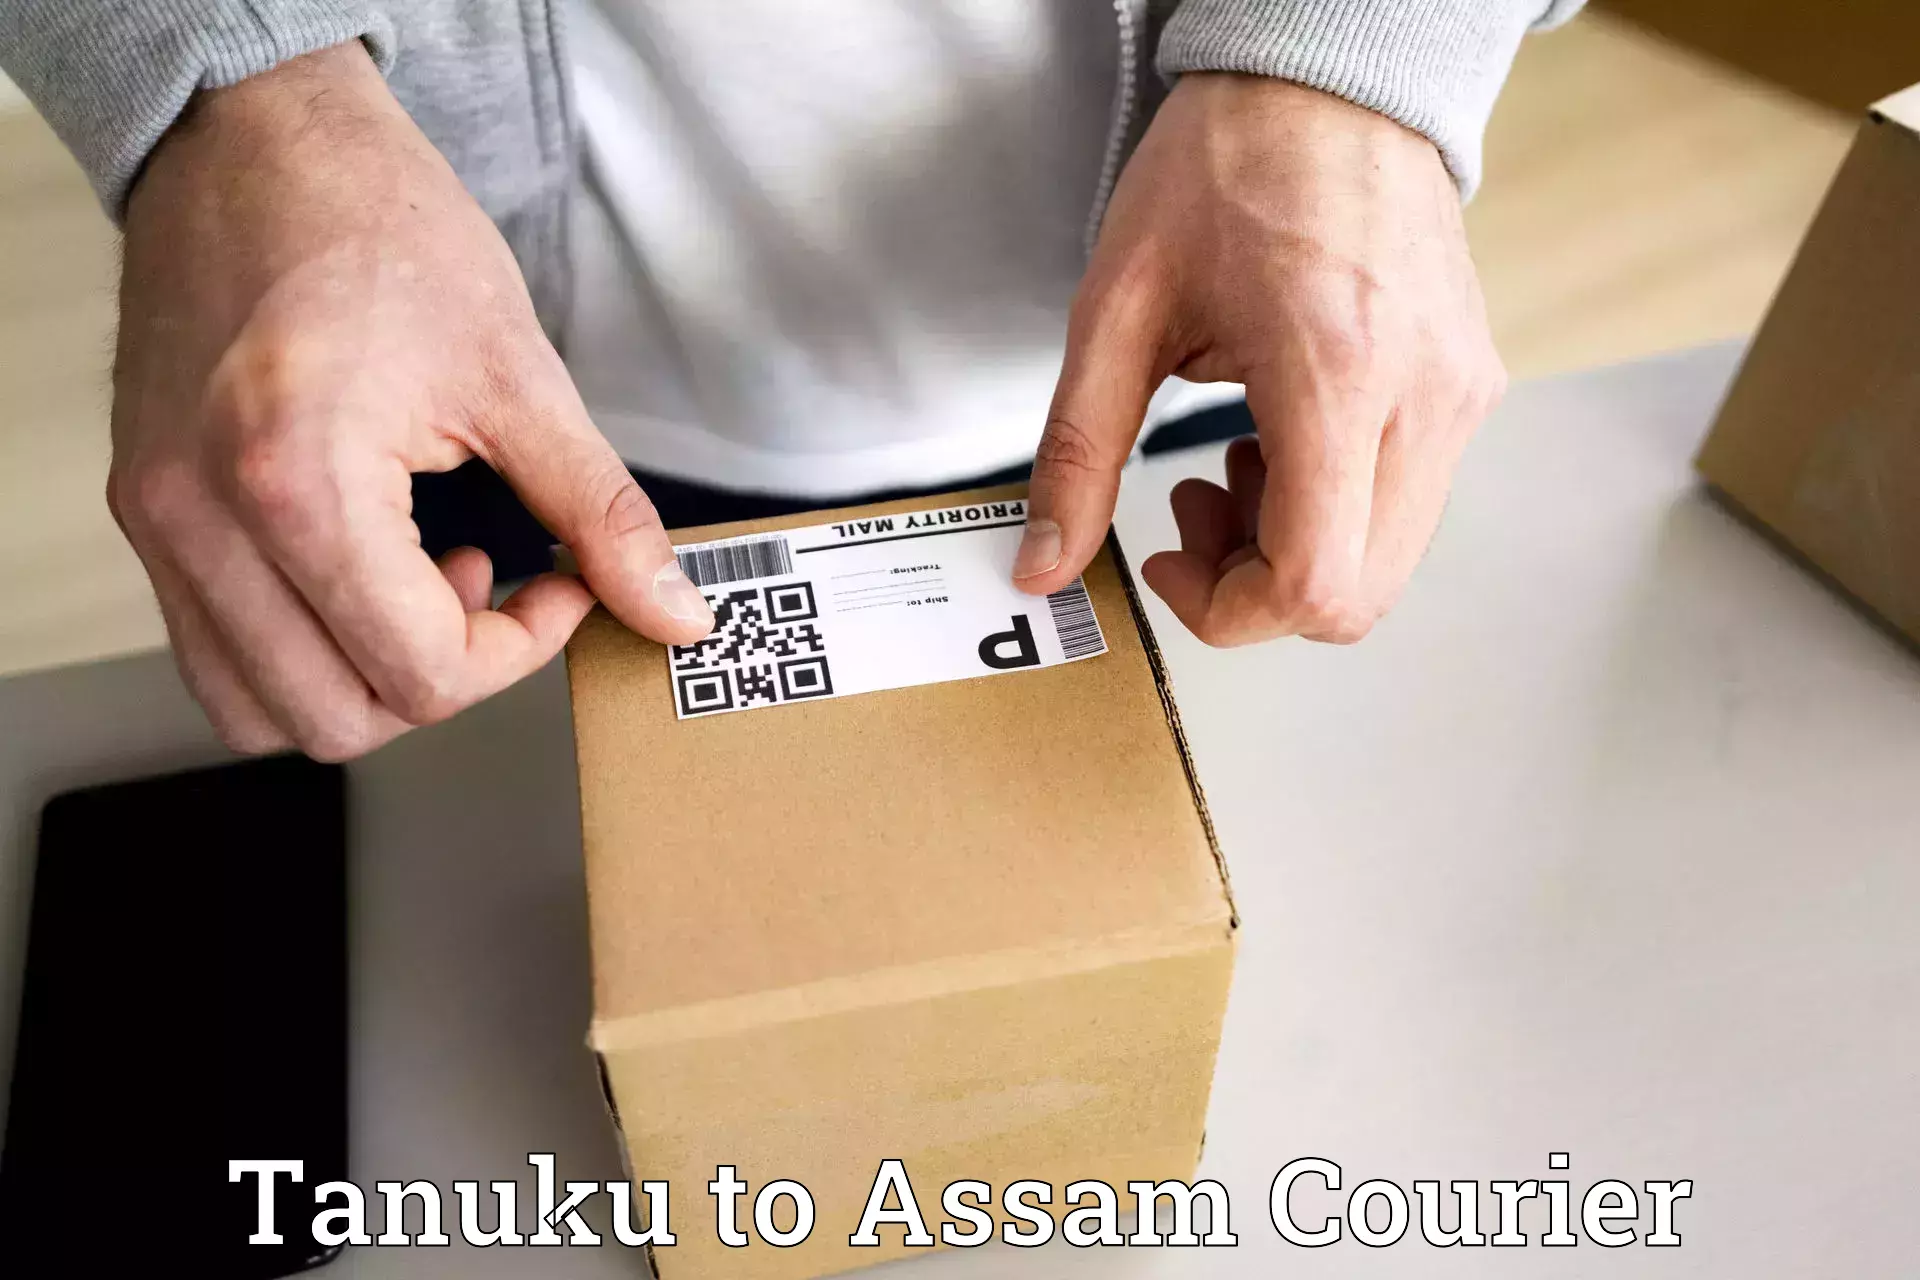 Courier service partnerships Tanuku to Assam